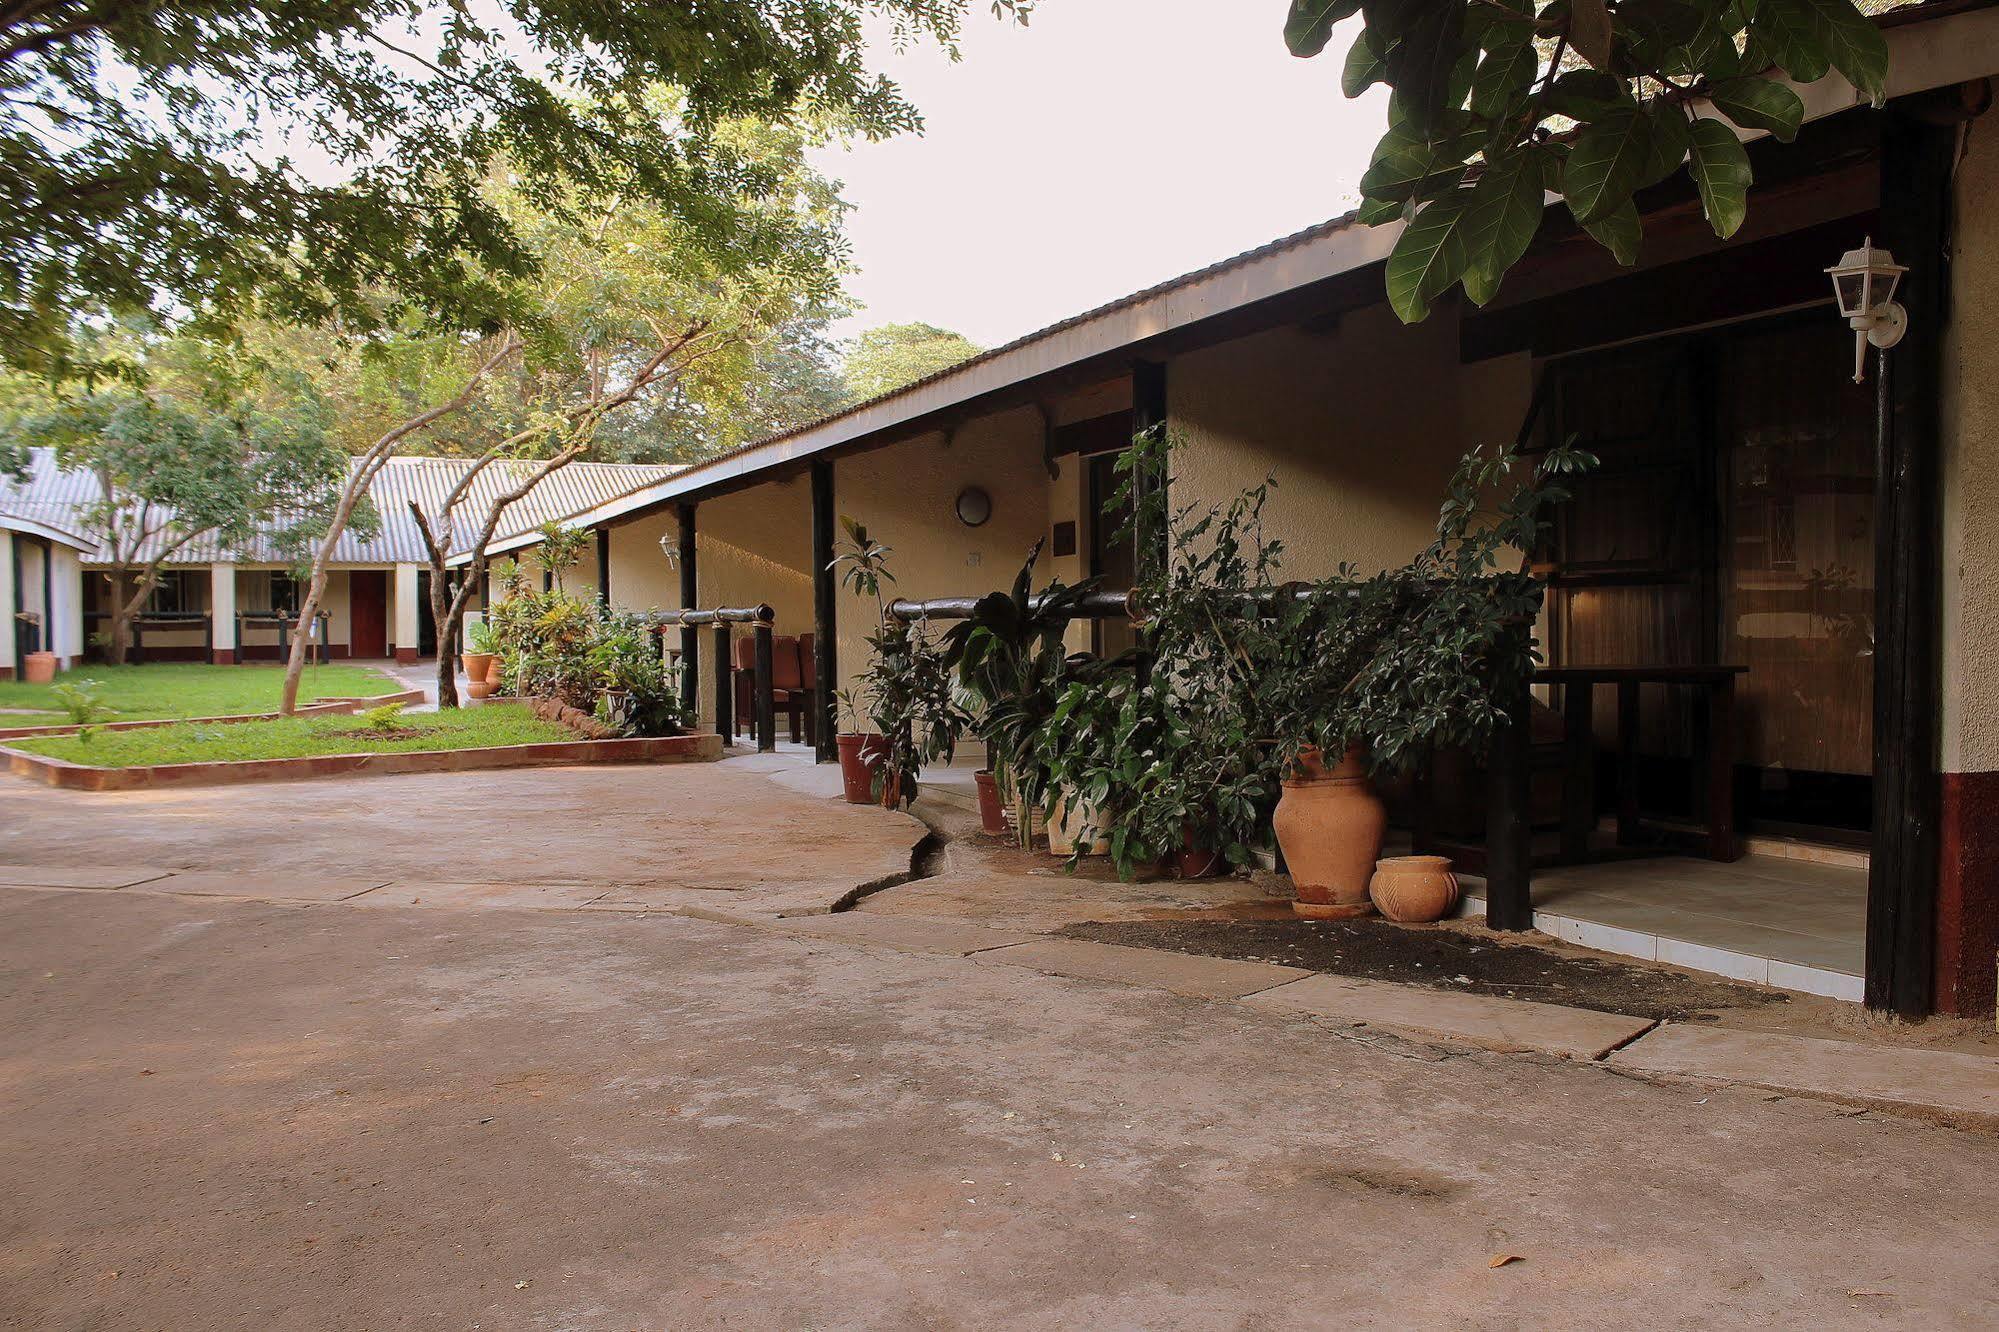 Pamusha Lodge Victoria Falls Exterior photo